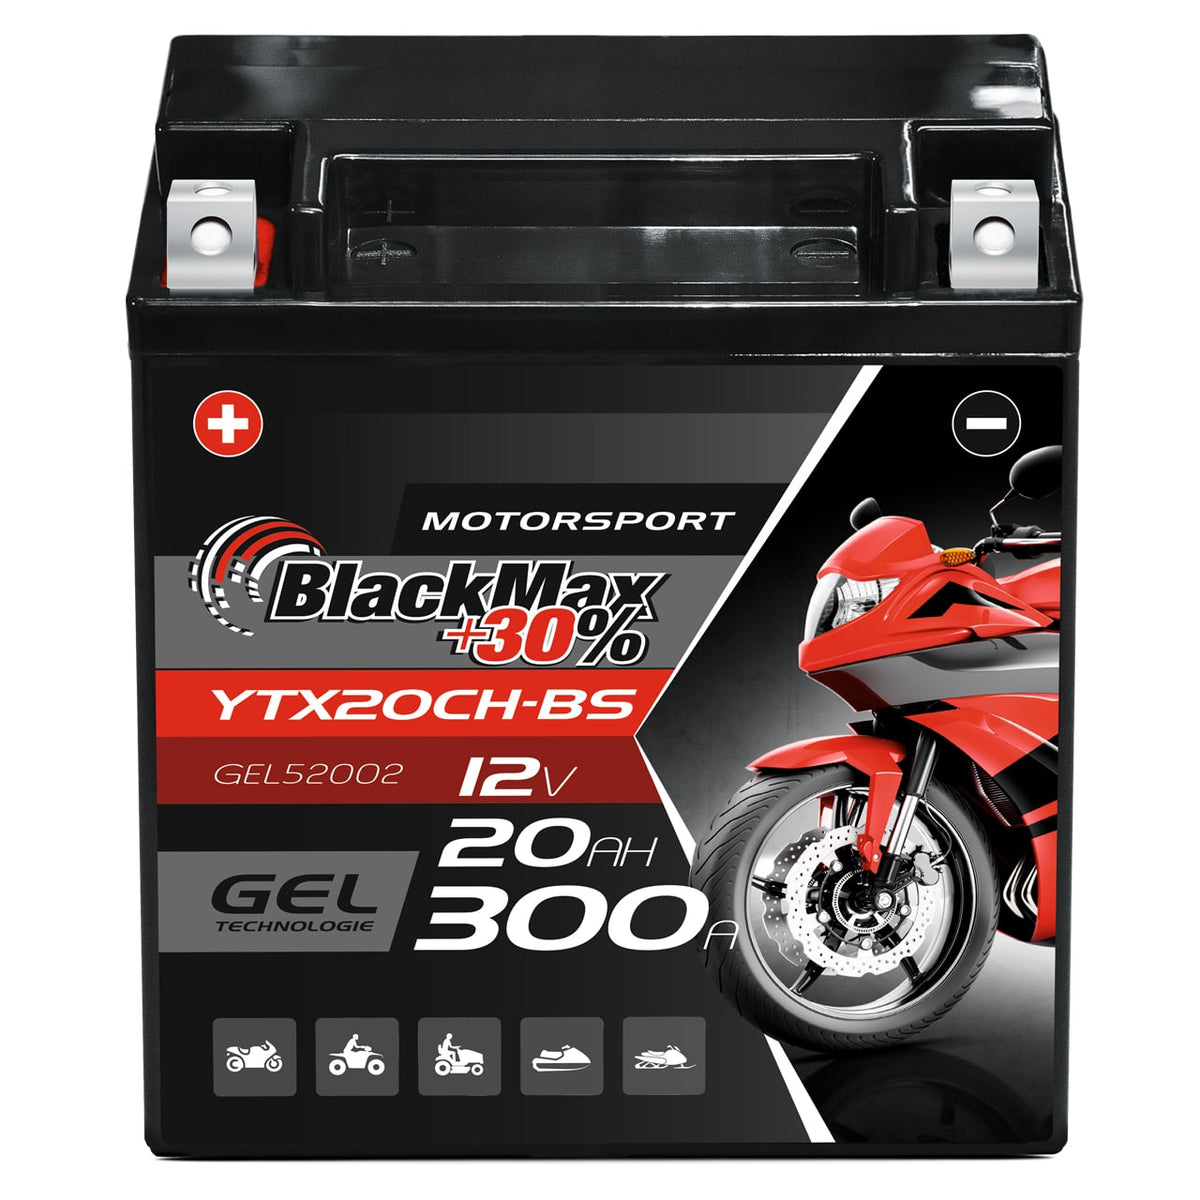 BlackMax +30% Motorsport YTX20CH-BS 52002 GEL 12V 20Ah 300A/EN